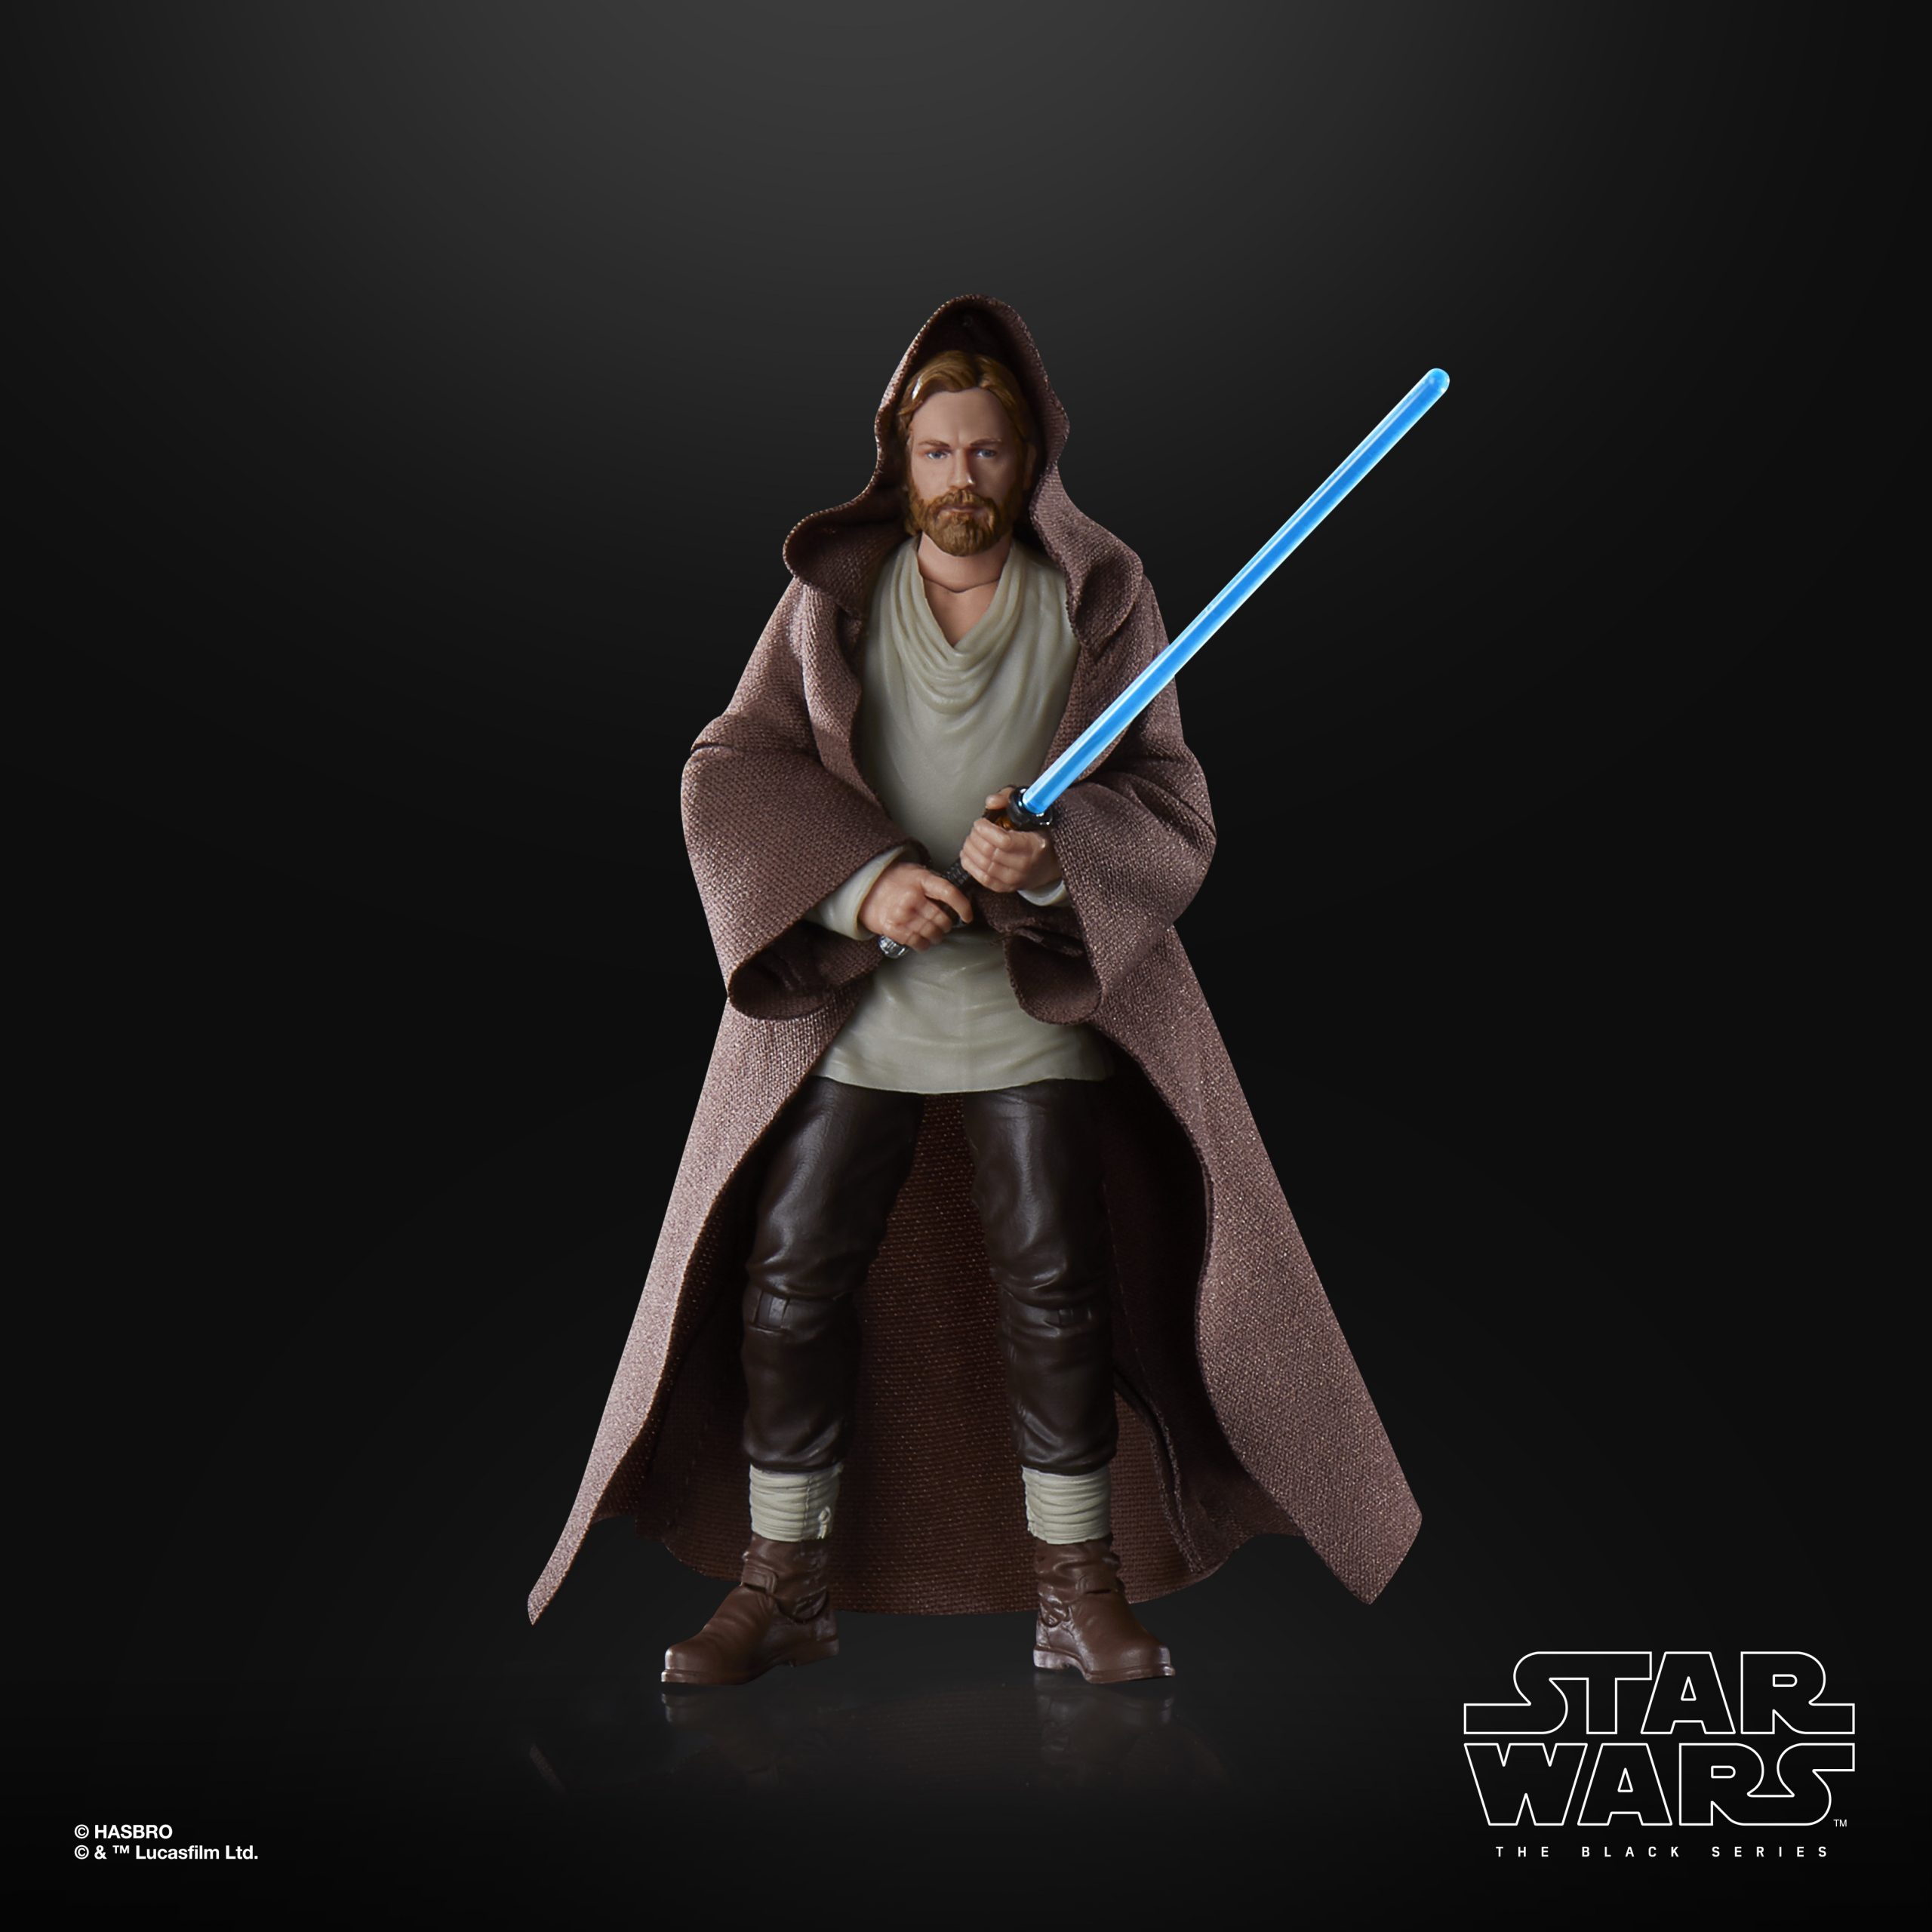 Obi-Wan Kenobi (Wandering Jedi) Press Release